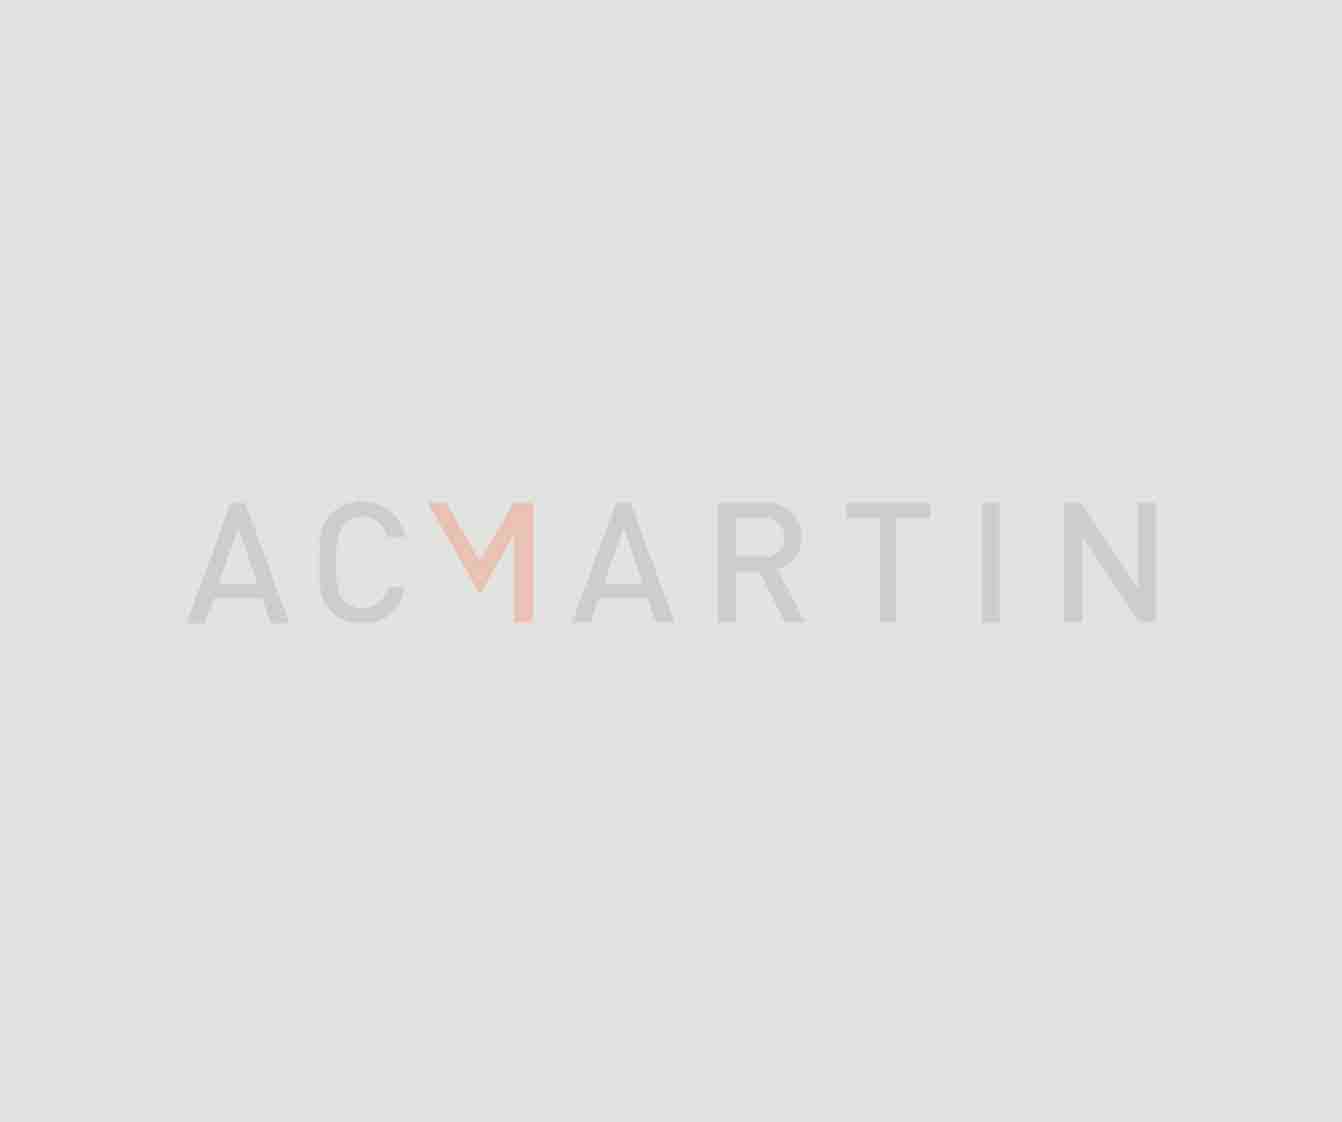 AC Martin Architects Logo.